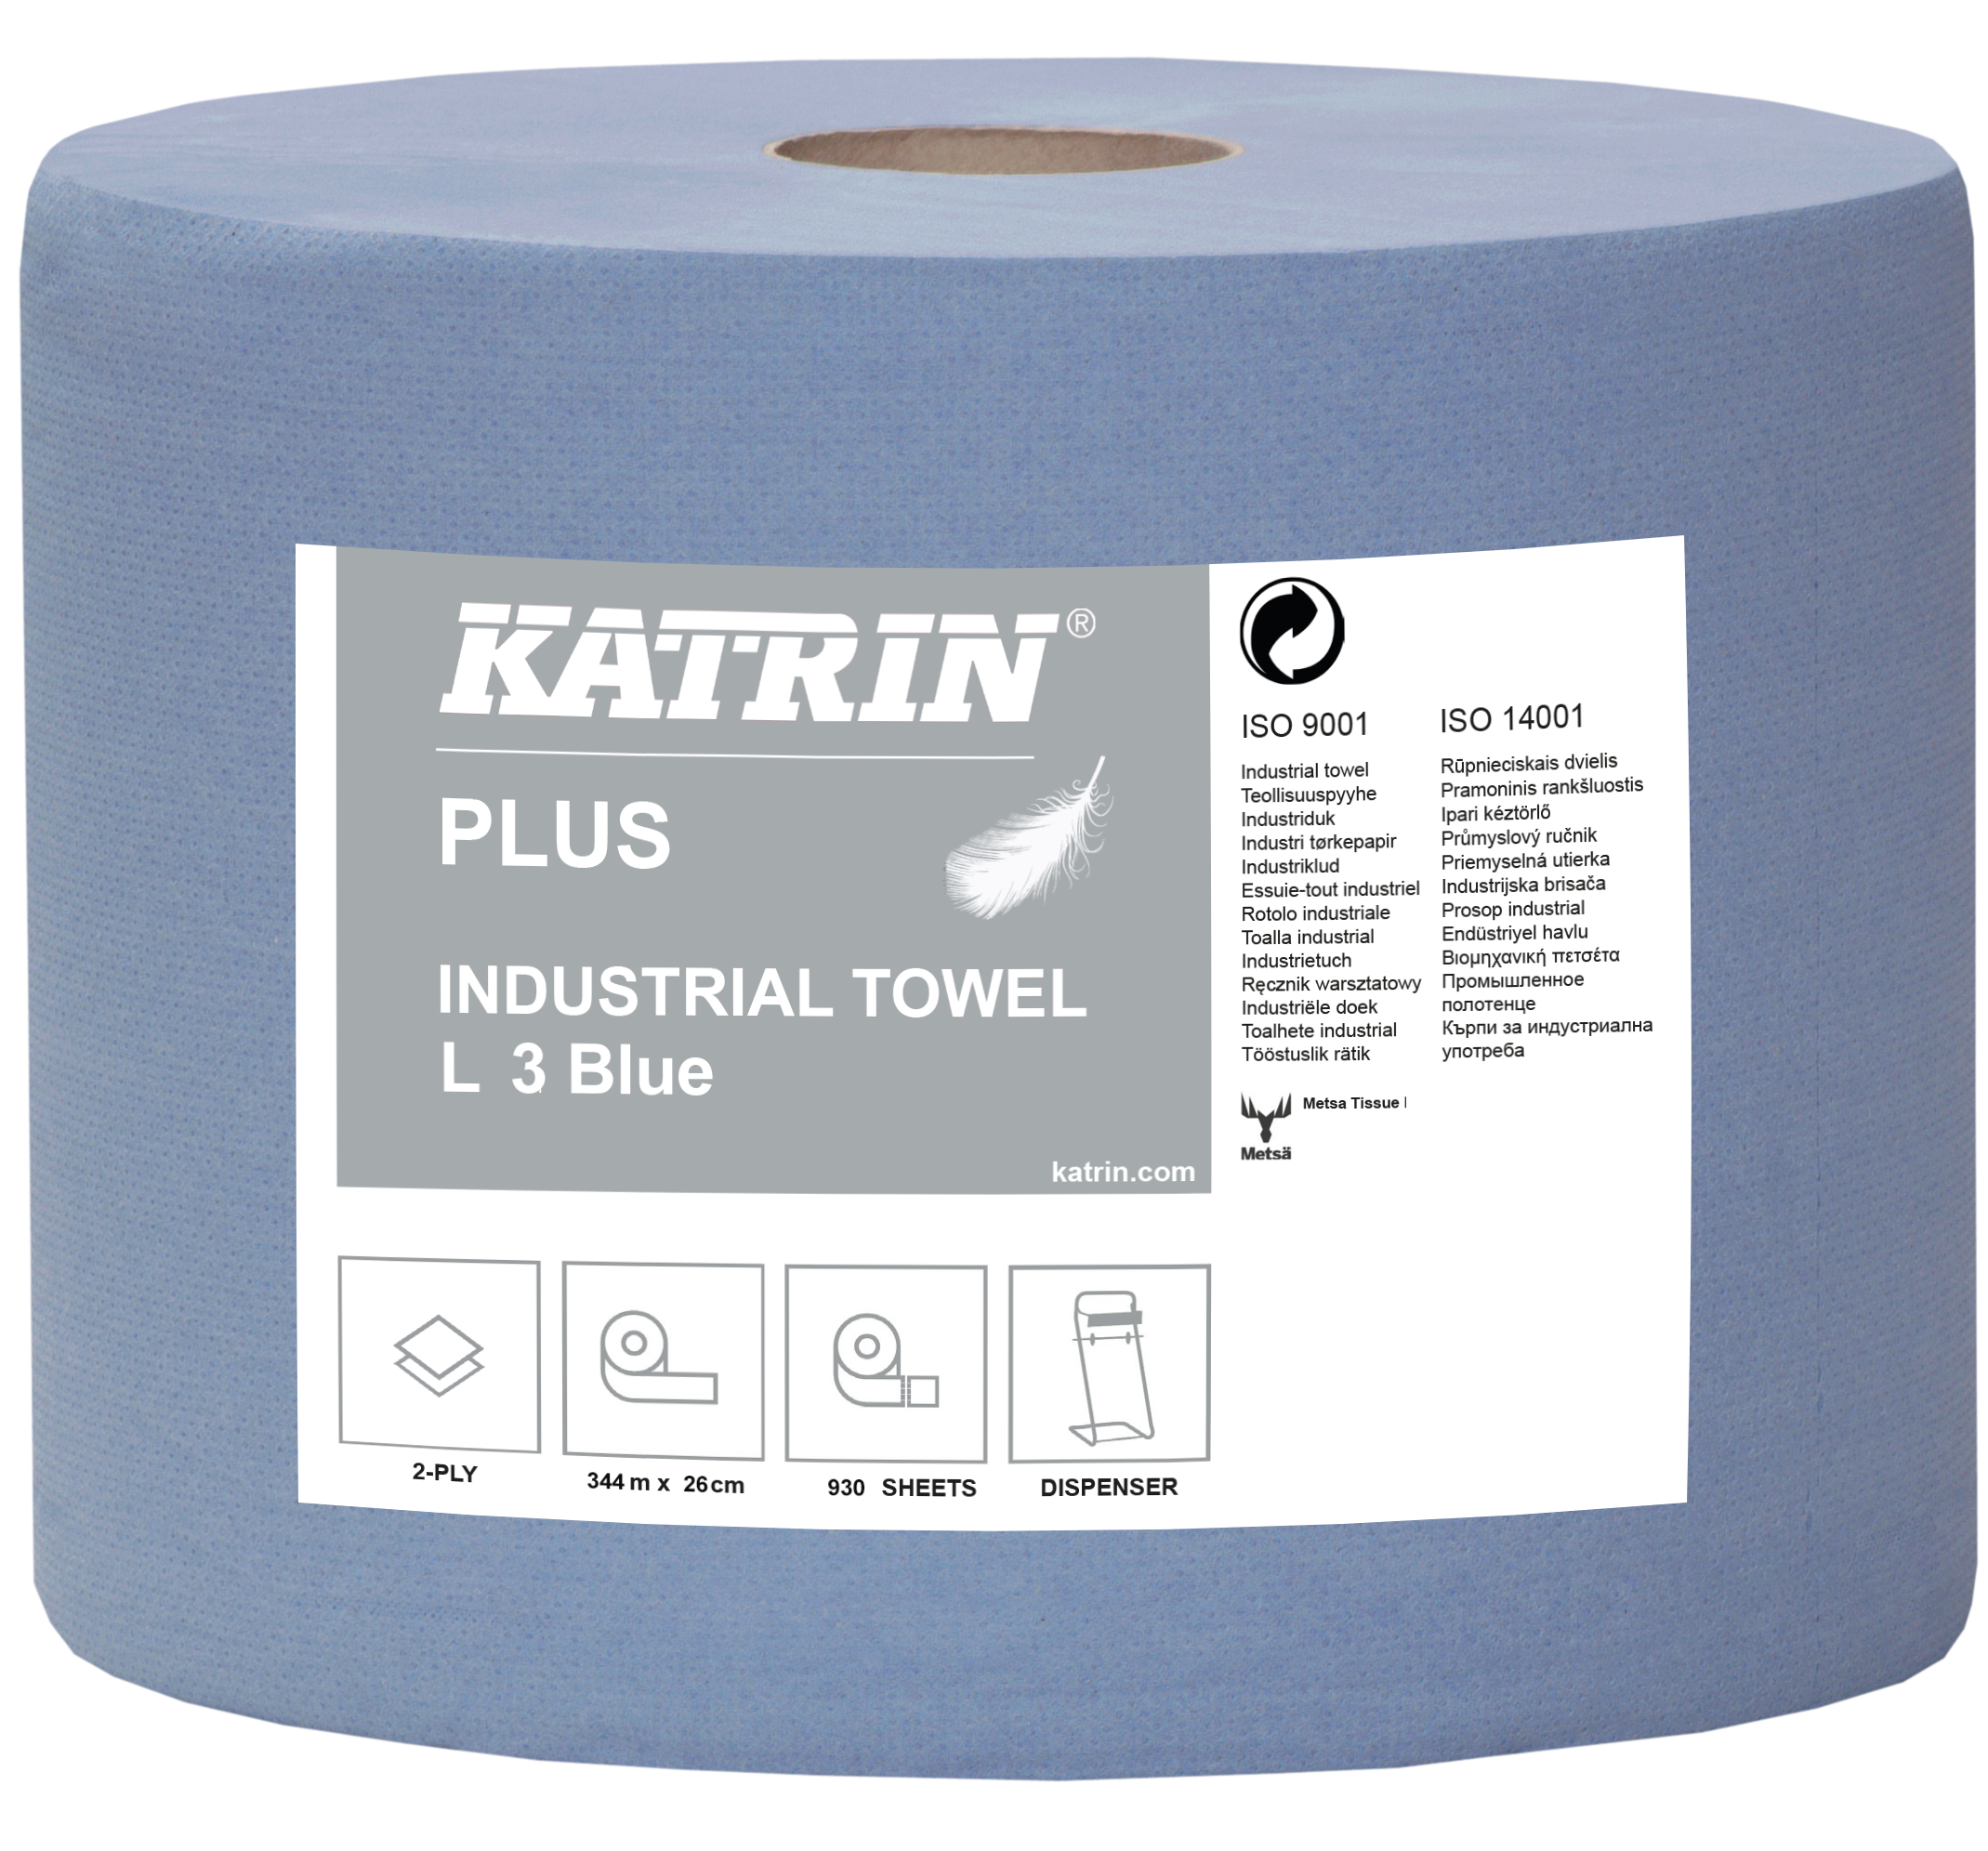 Katrin Plus Industrial Towel L2 Blue